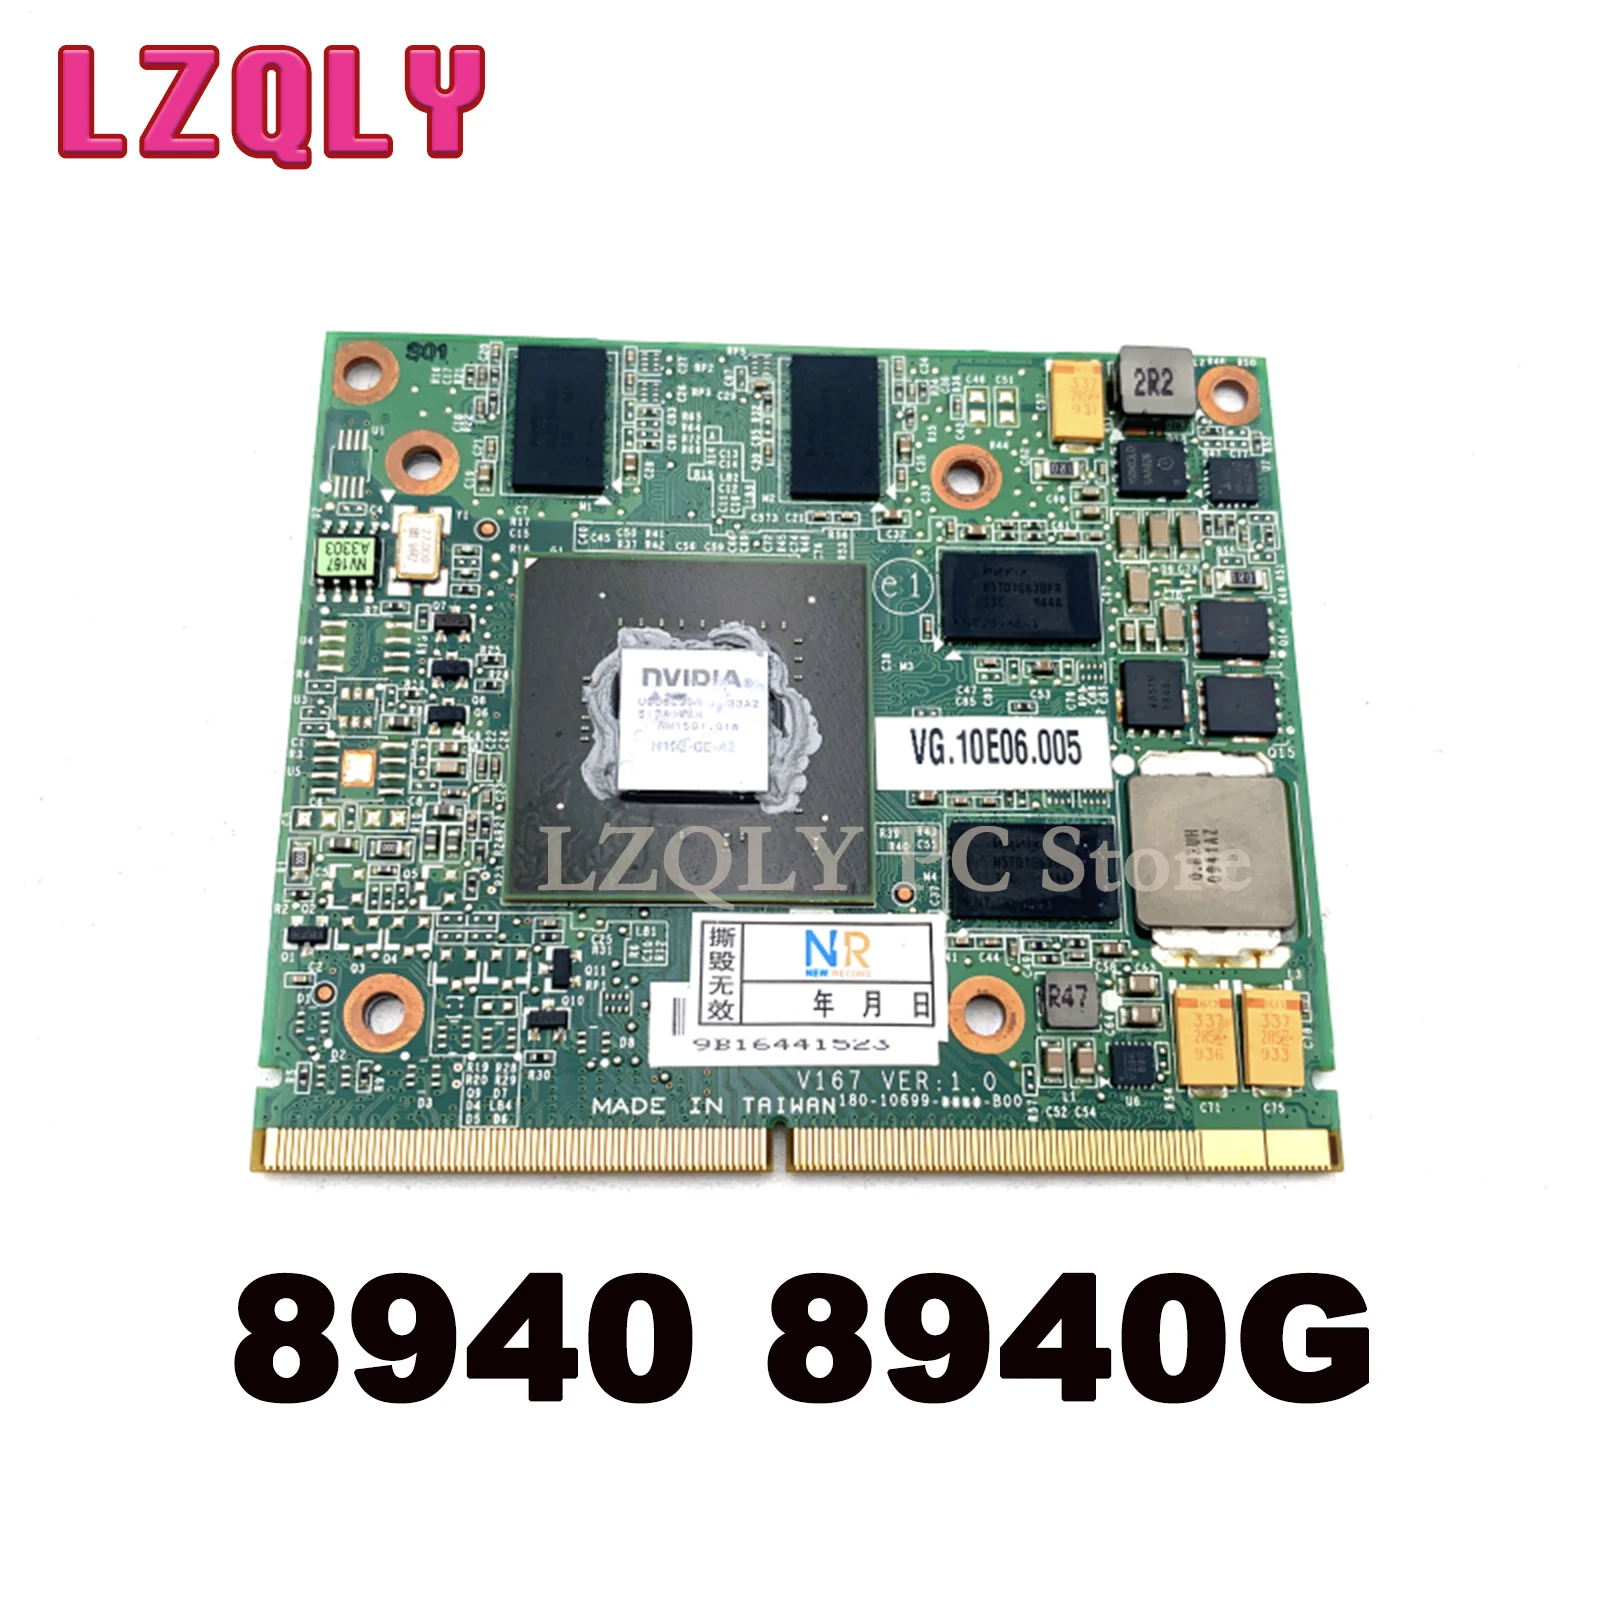 LZQLY DA0ZY9MB6D0 VG.10E06.005 GPU For ACER Aspire 8940 8940G Graphics Card GTS250M 1G